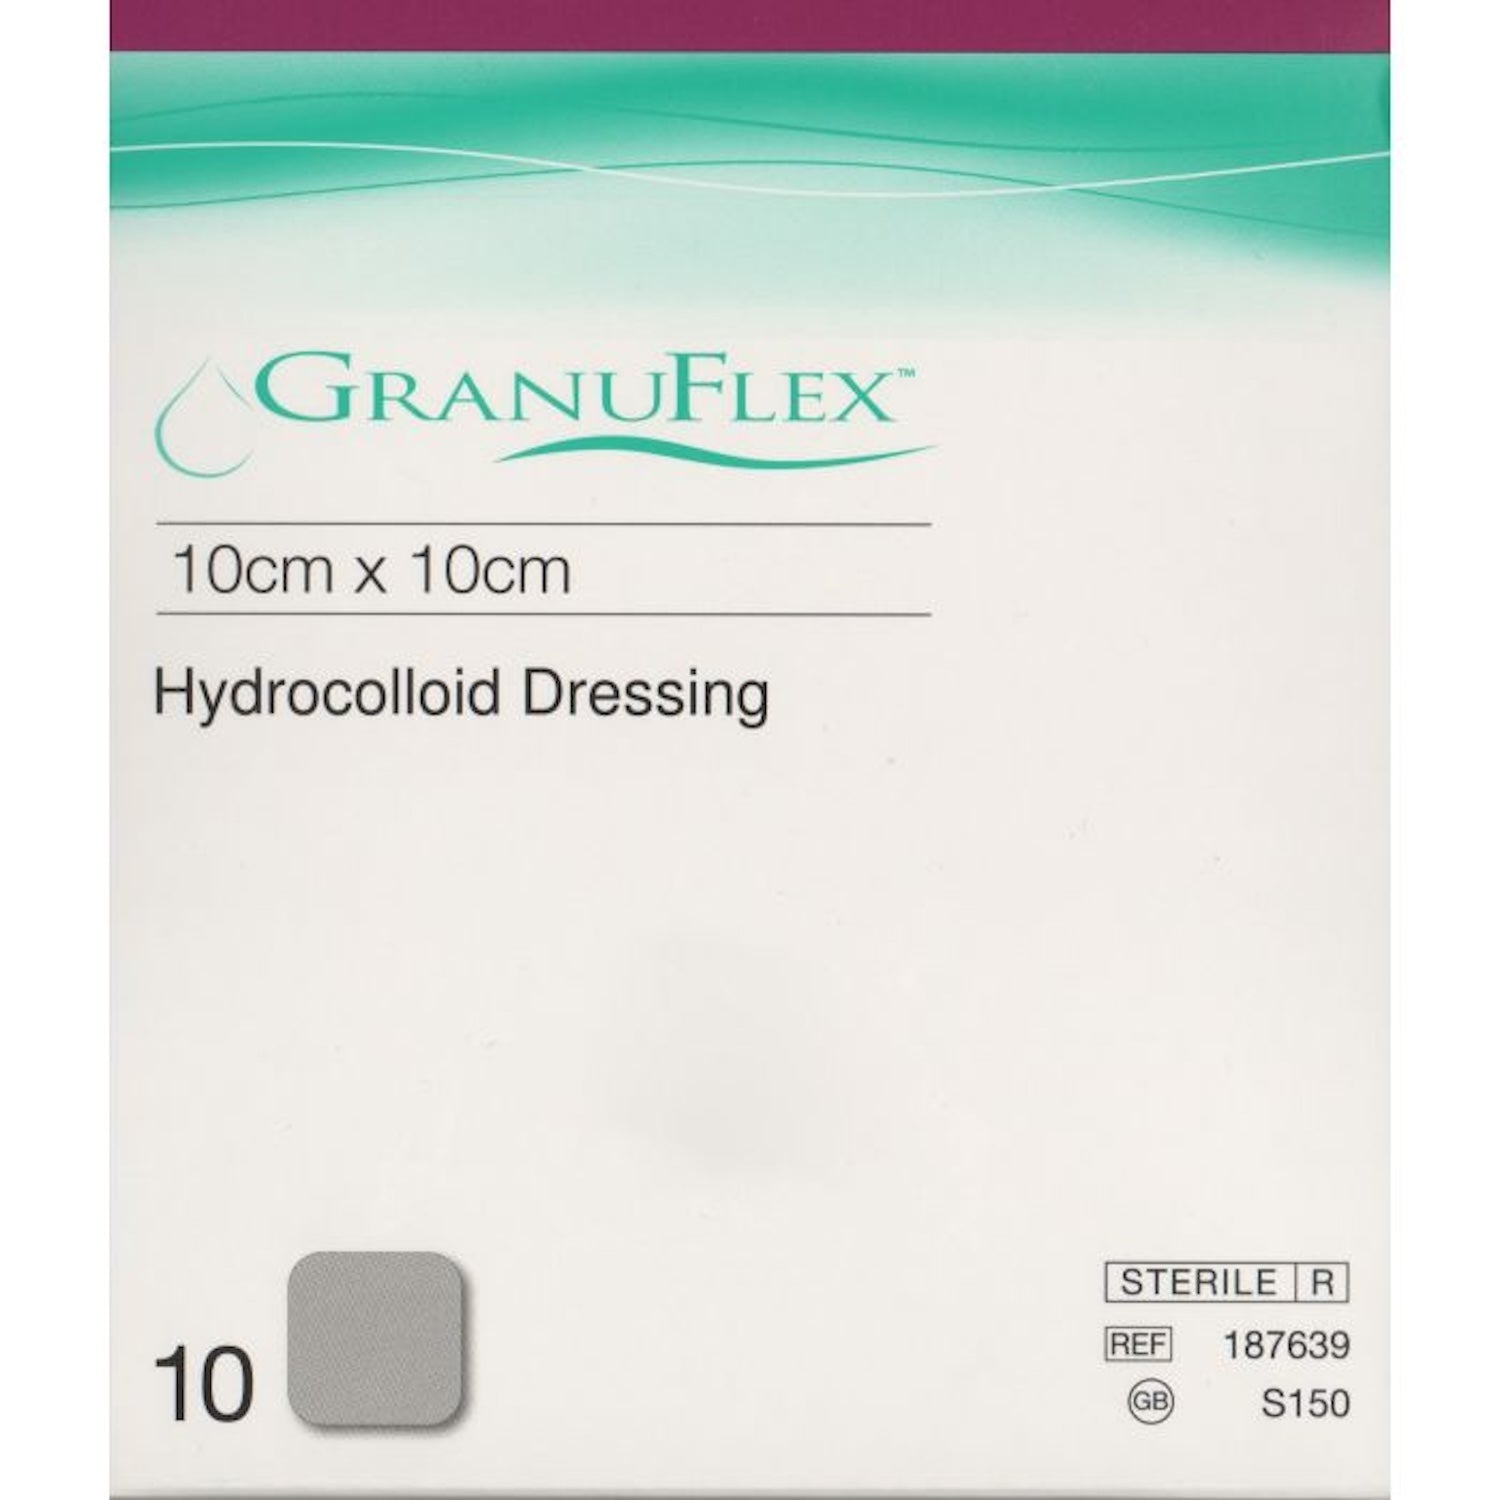 Granuflex Hydrocolloide Dressing | 10 x 10cm | Pack of 10